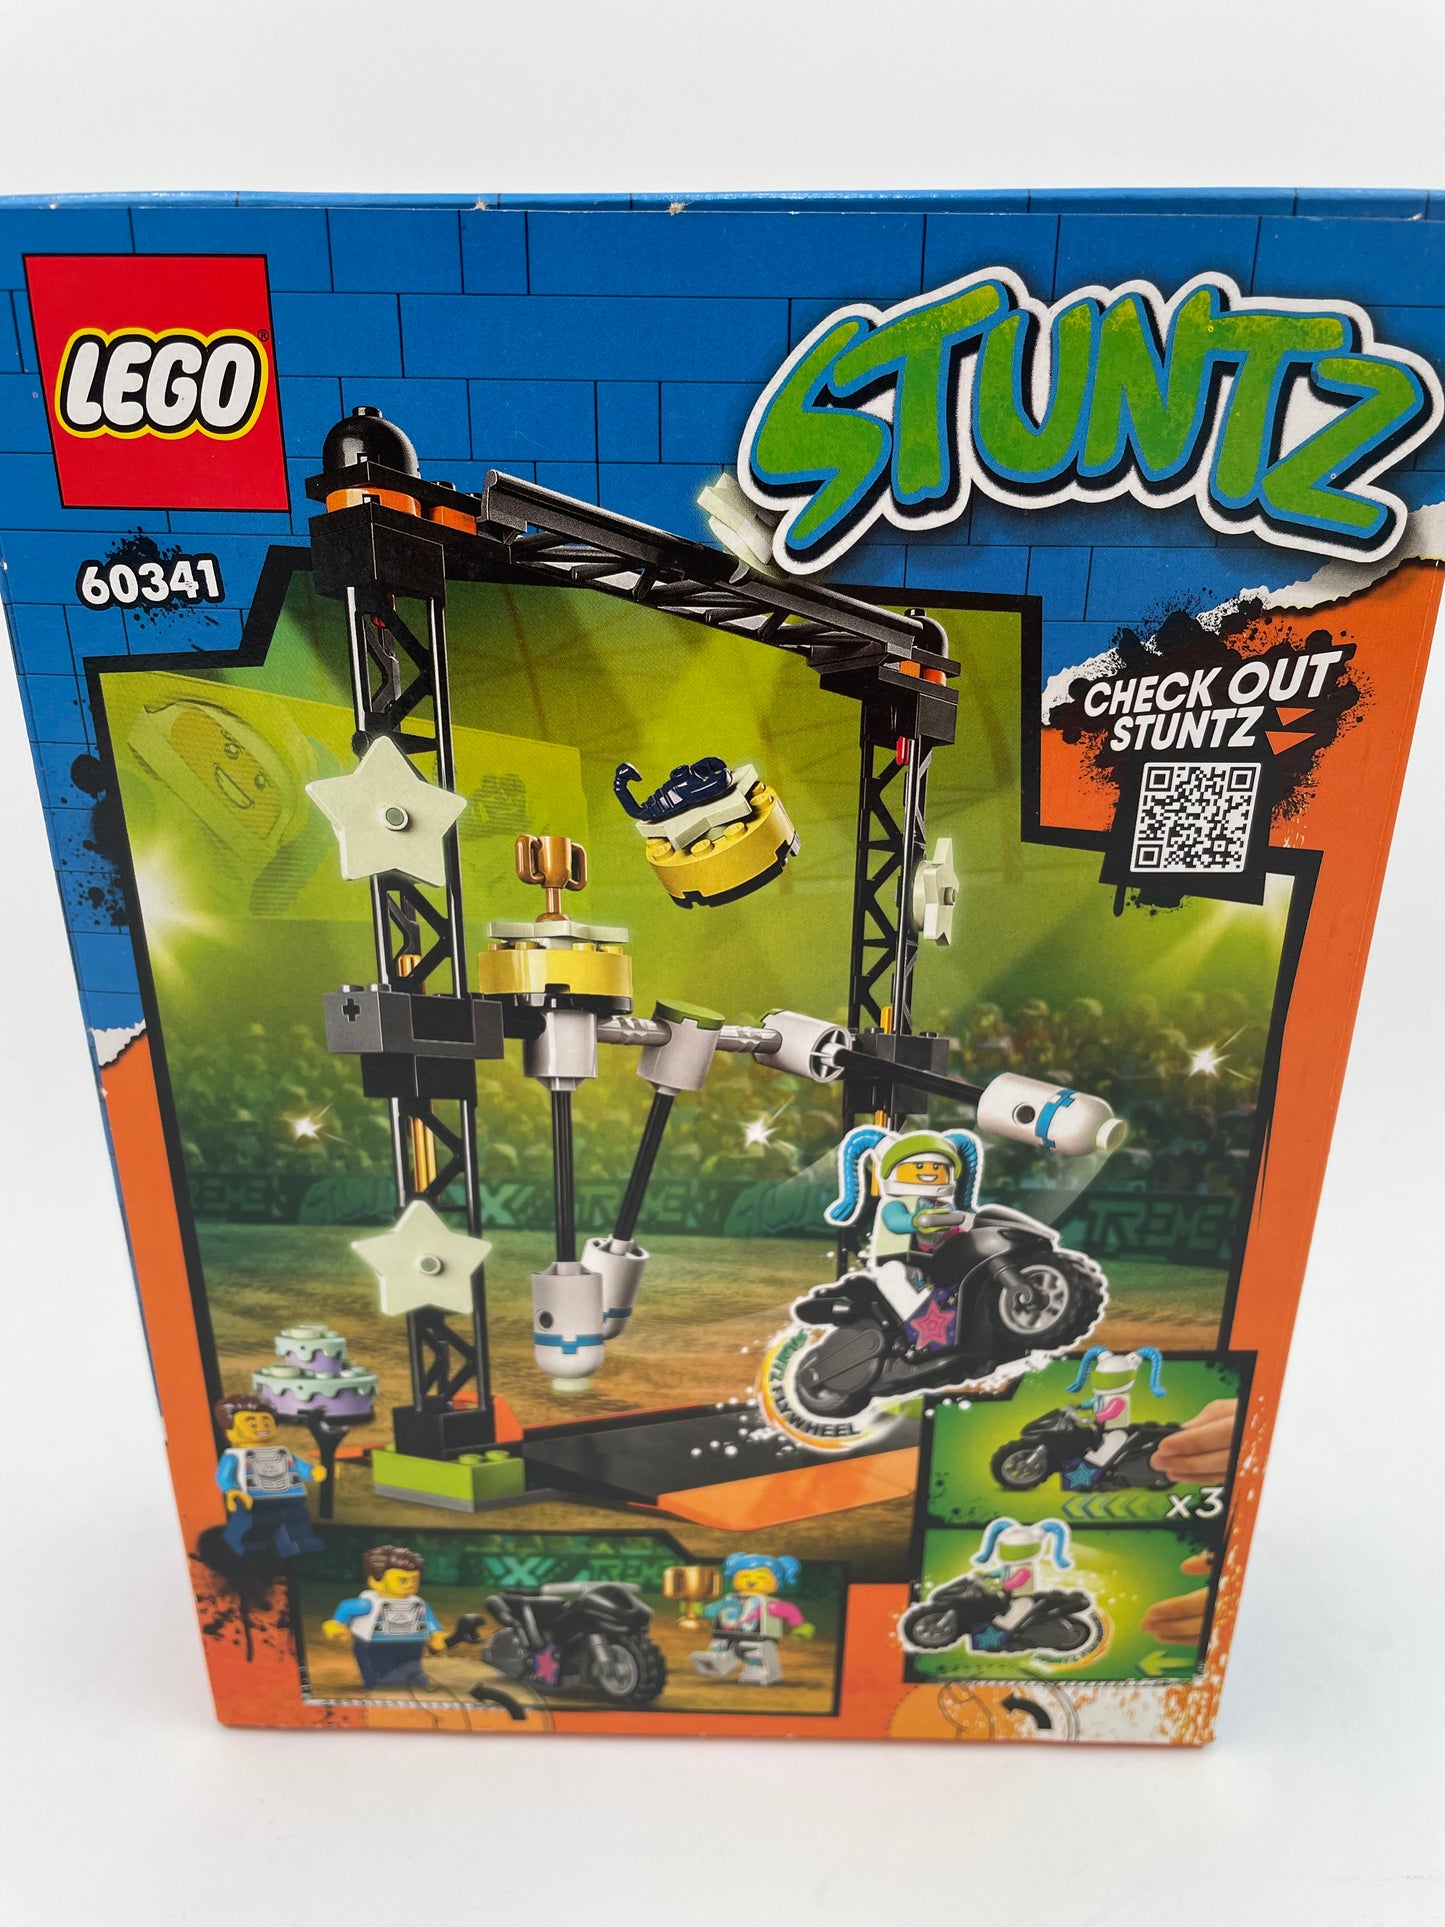 LEGO 60341 - City - The Knockdown Stunt Challenge 2022 #100375